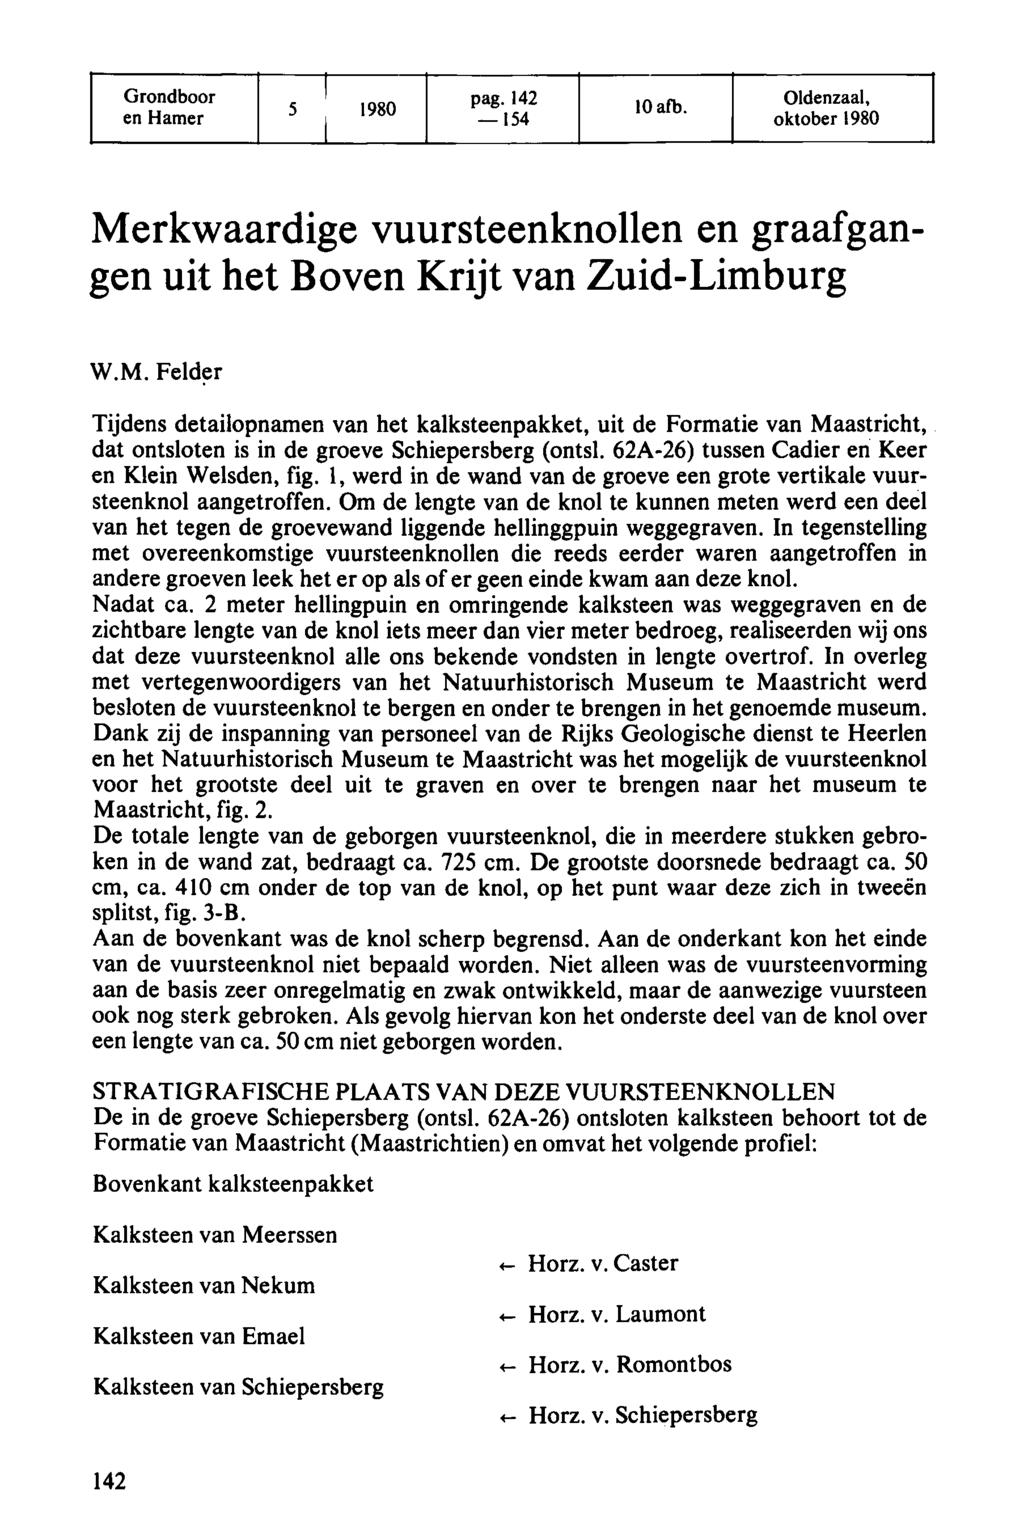 Grondboor en Hamer 1 5 1980 pag. 142 154 loafb. Oldenzaal, oktober 1980 Me